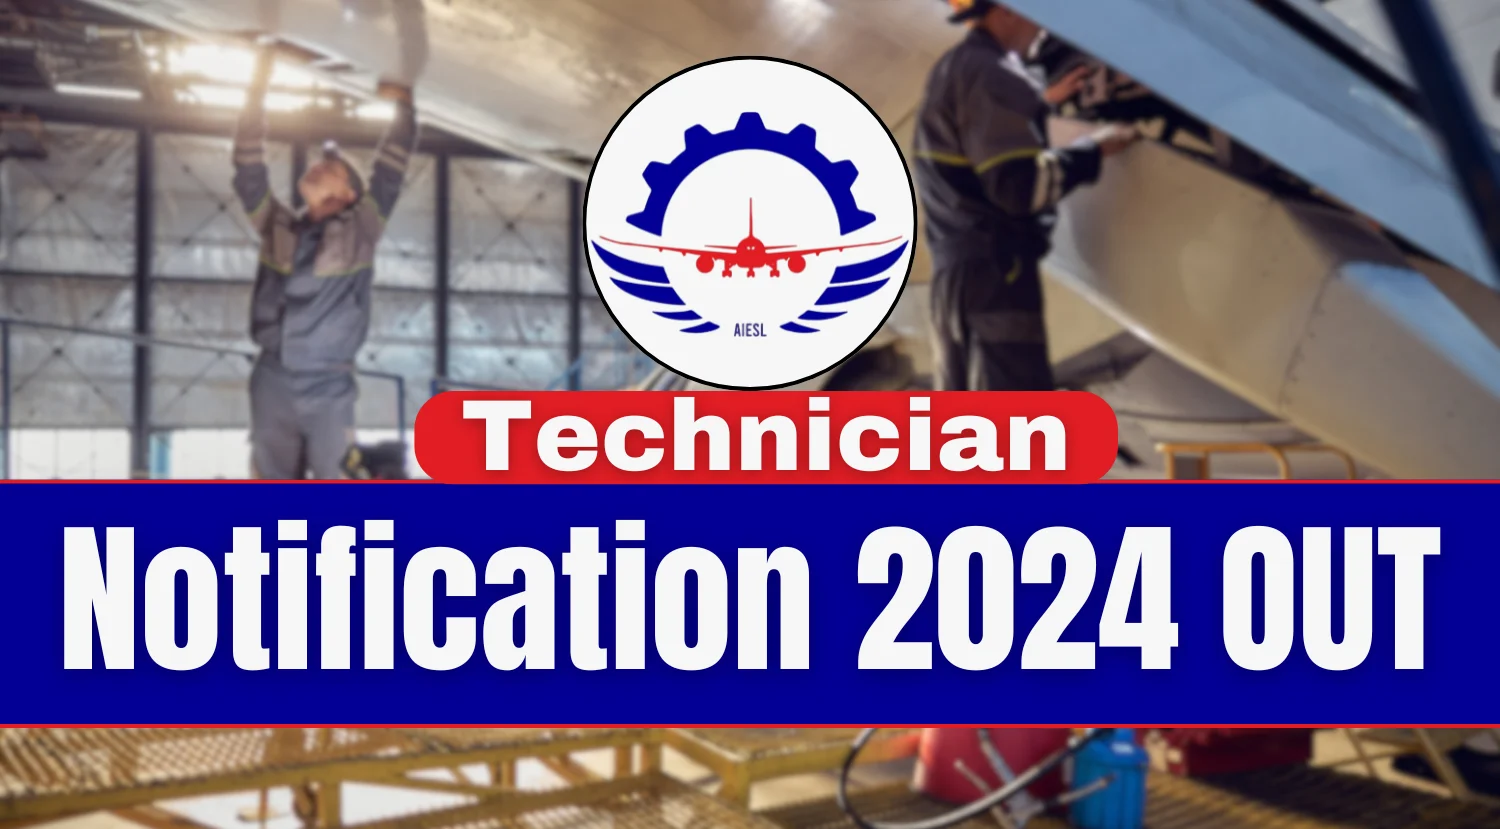 AIESL Technician Recruitment 2024 Notification for 100 Vacancies Released